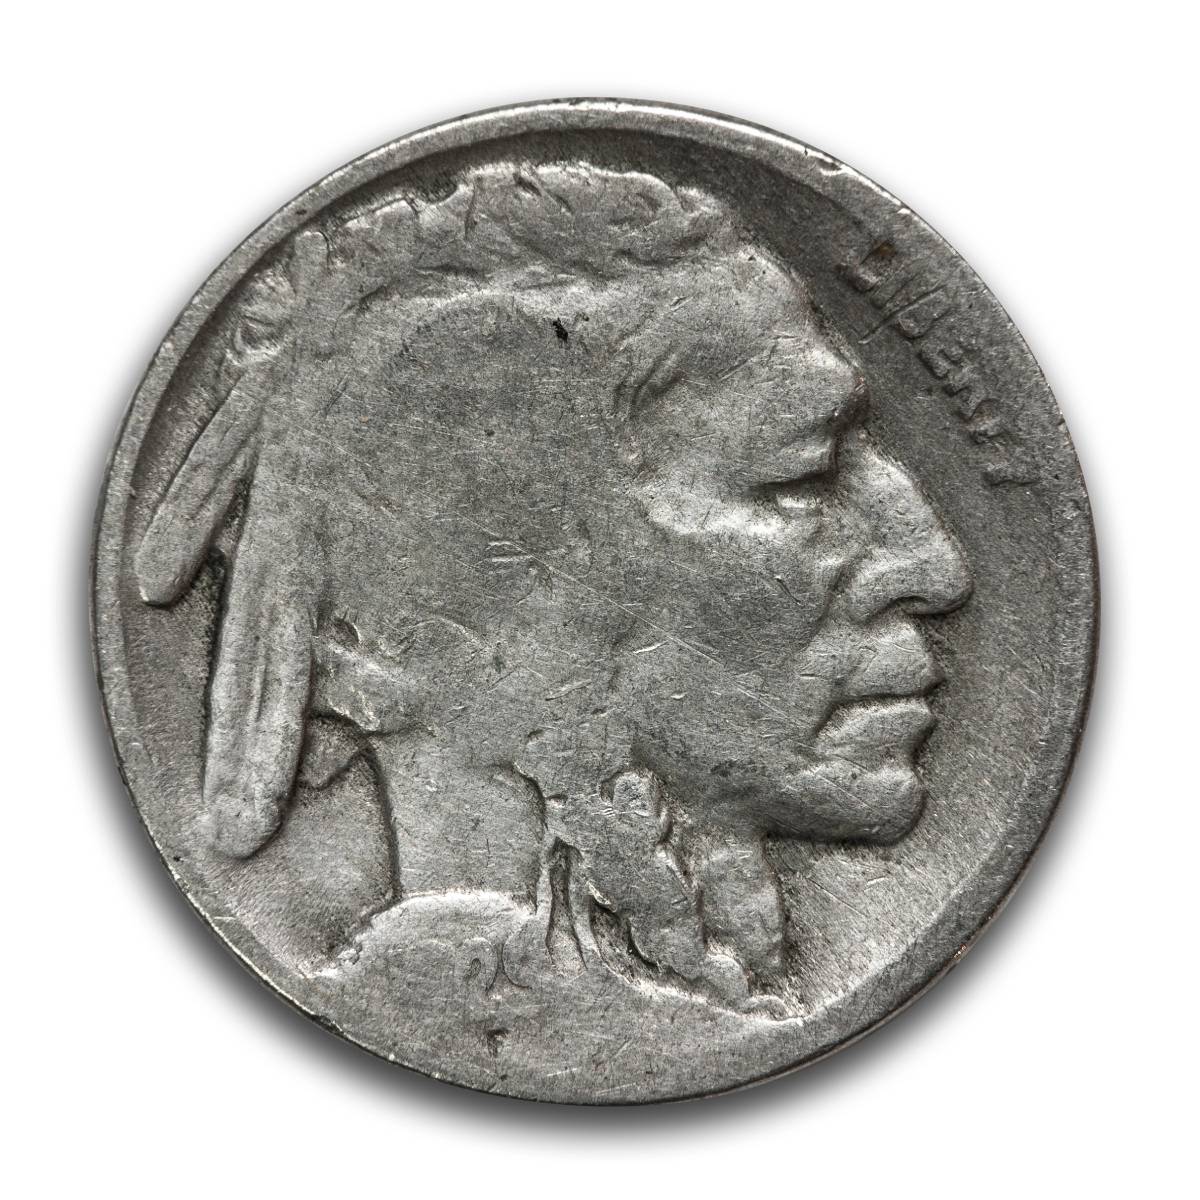 A closeup example of a dateless buffalo nickel - obverse.